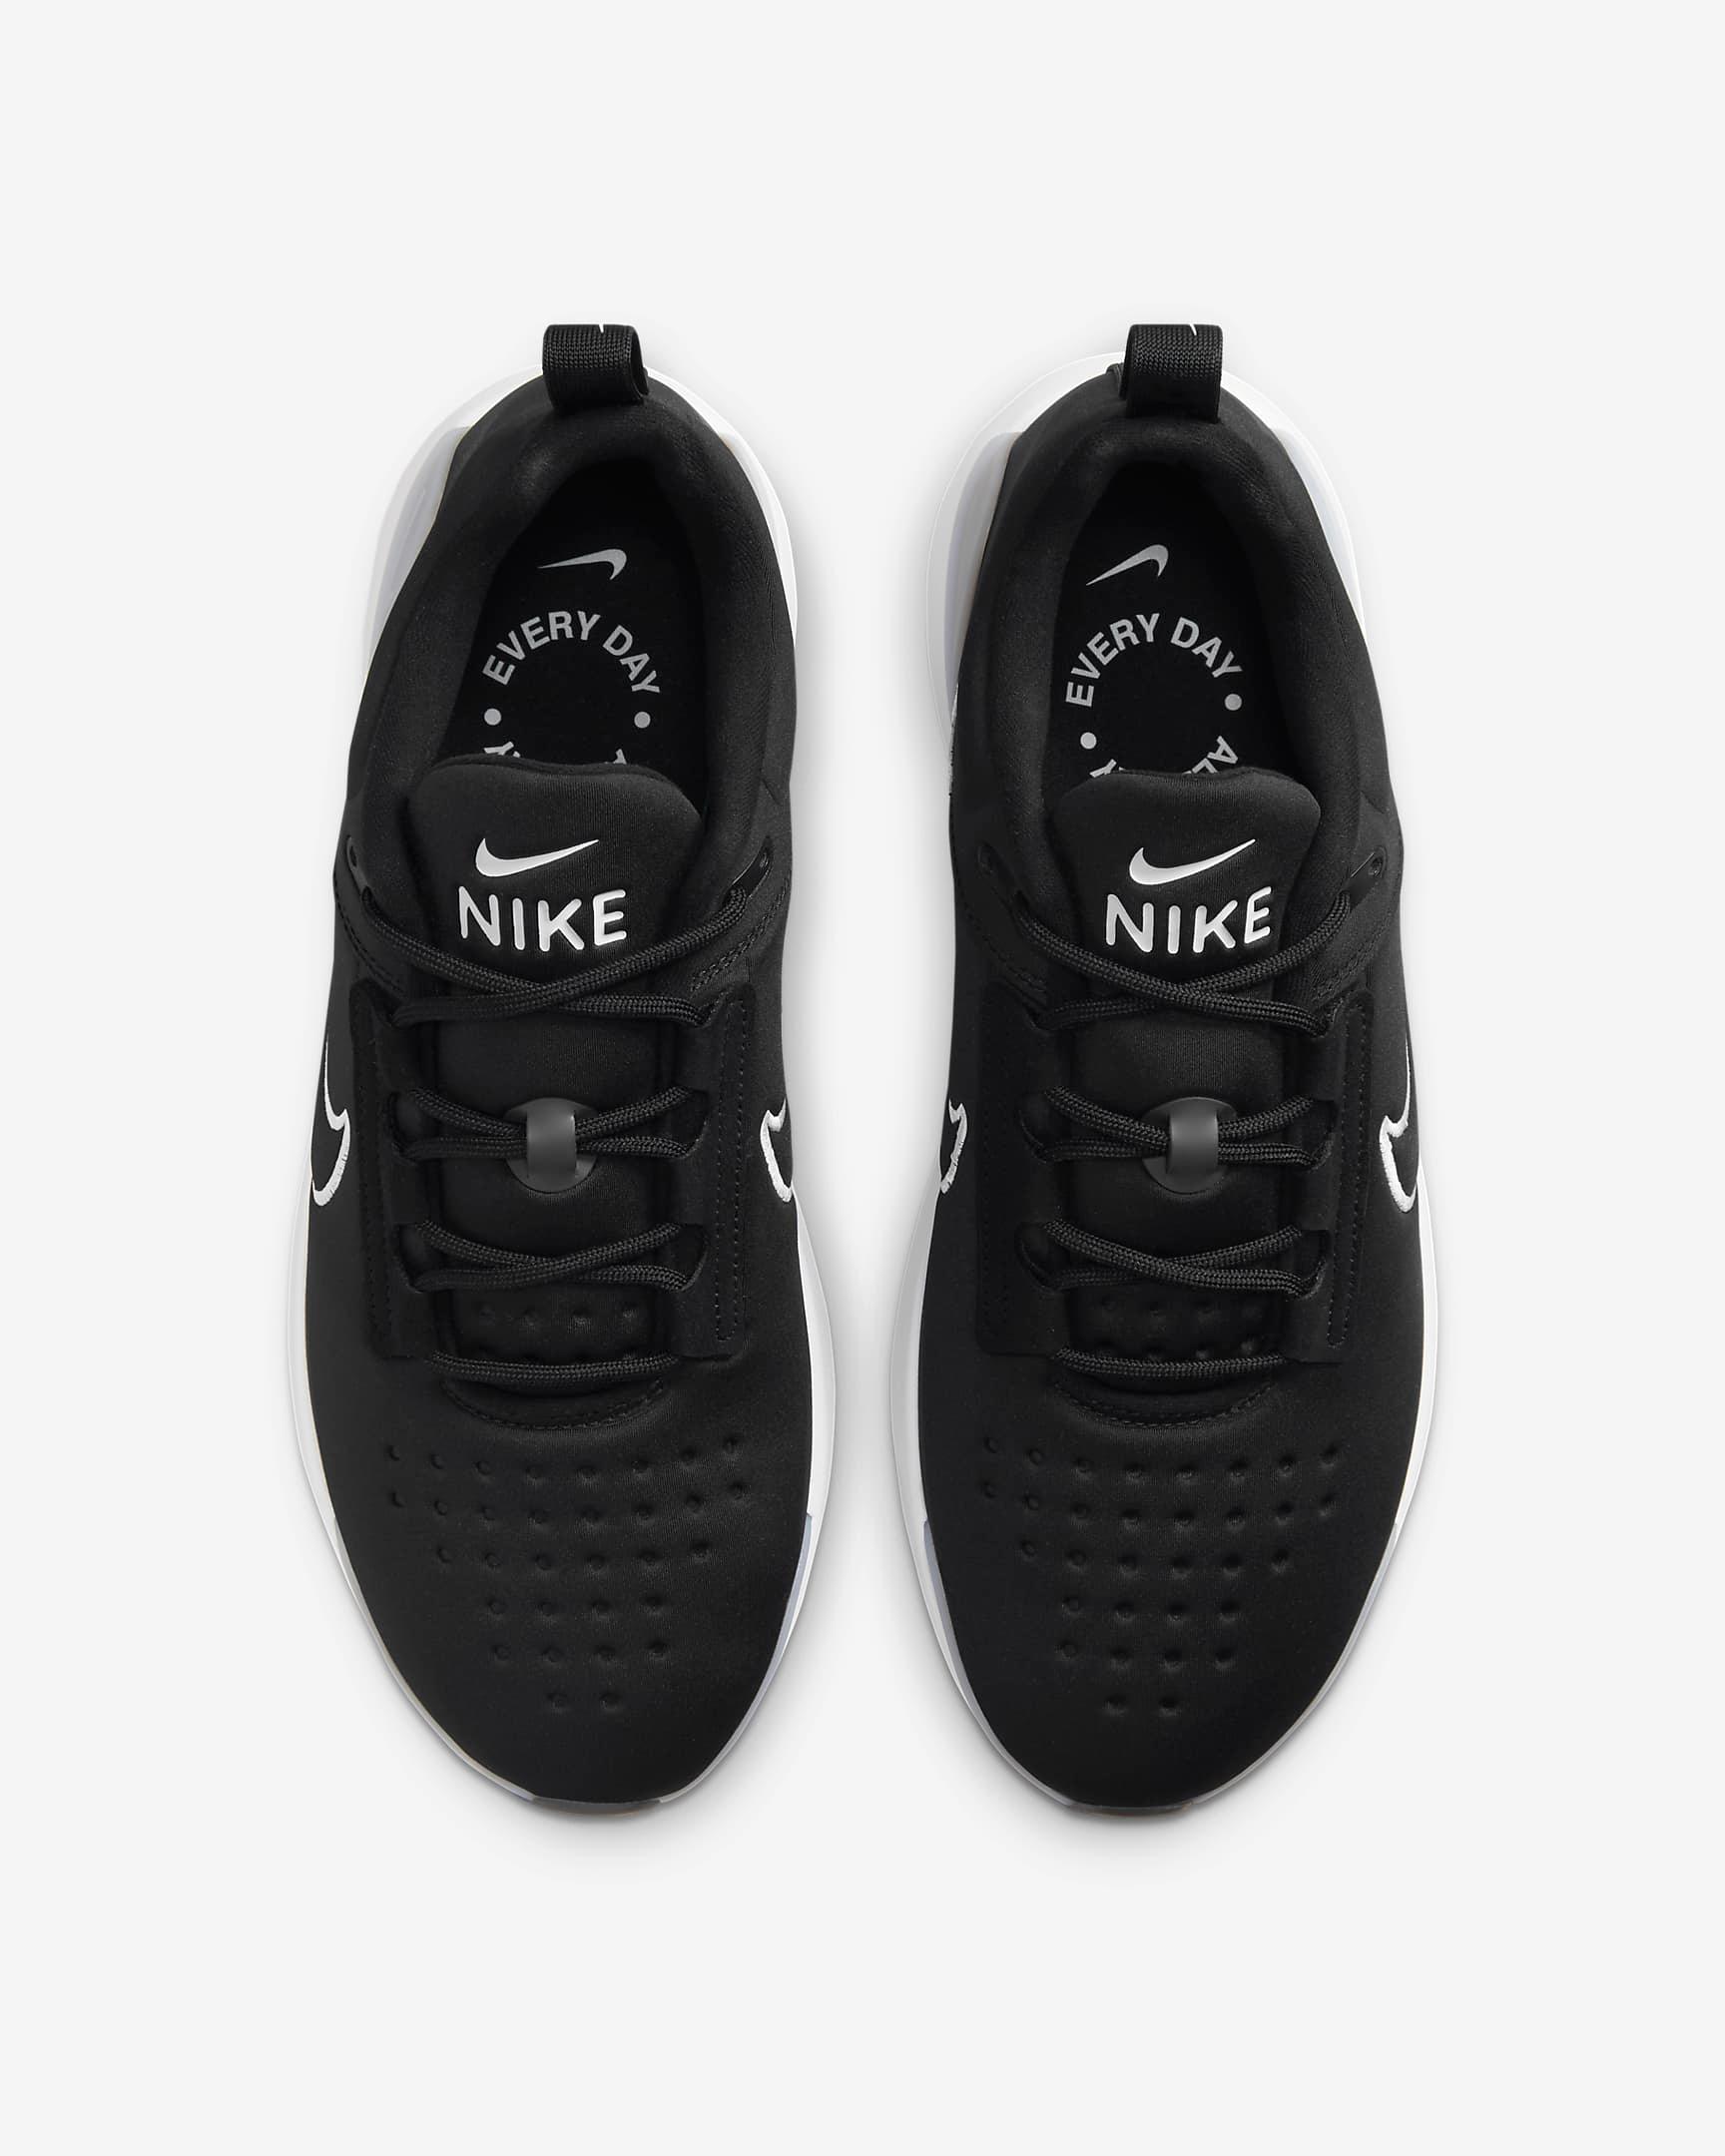 Giày Nike E-Series 1.0 Men Shoes #Anthracite - Kallos Vietnam